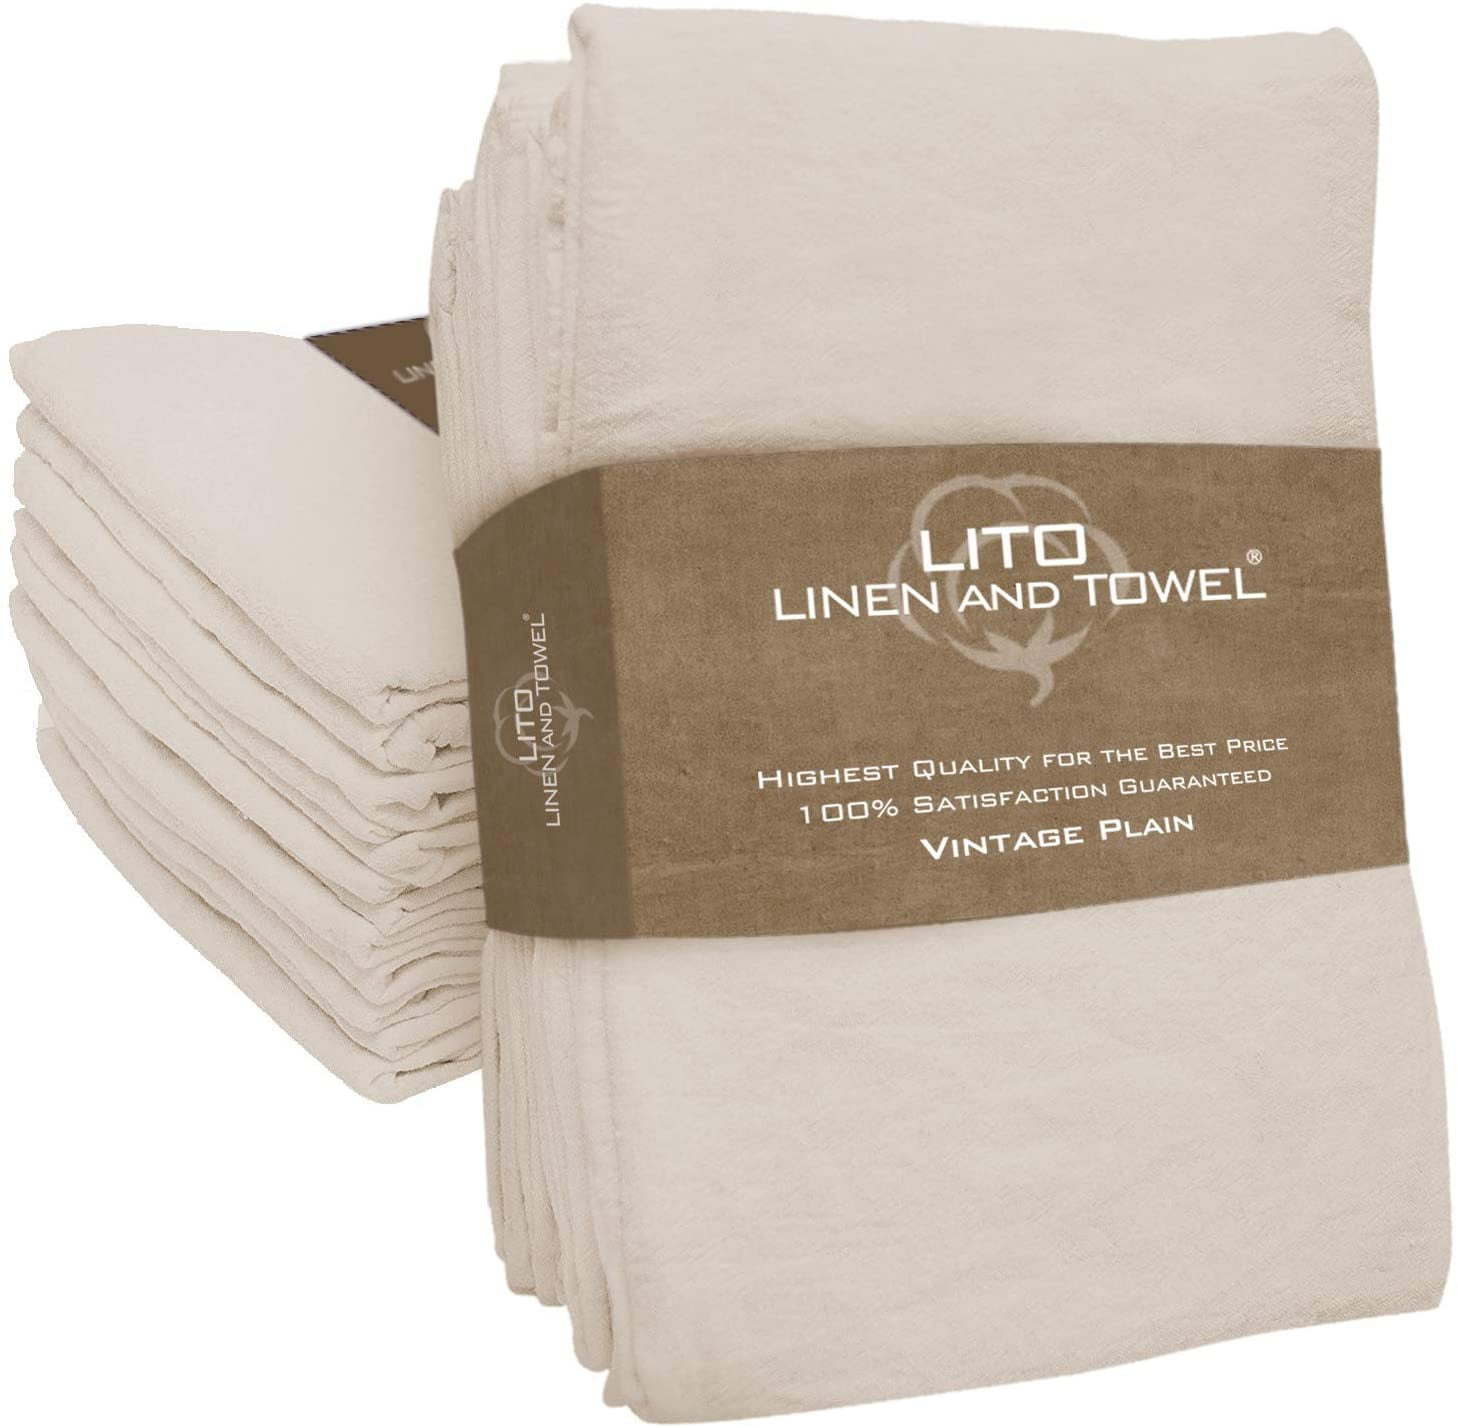 Kitchen Cotton Flour Sack Tea Towel WHATS SHAKIN S&P Shakers 15"x25" NEW 